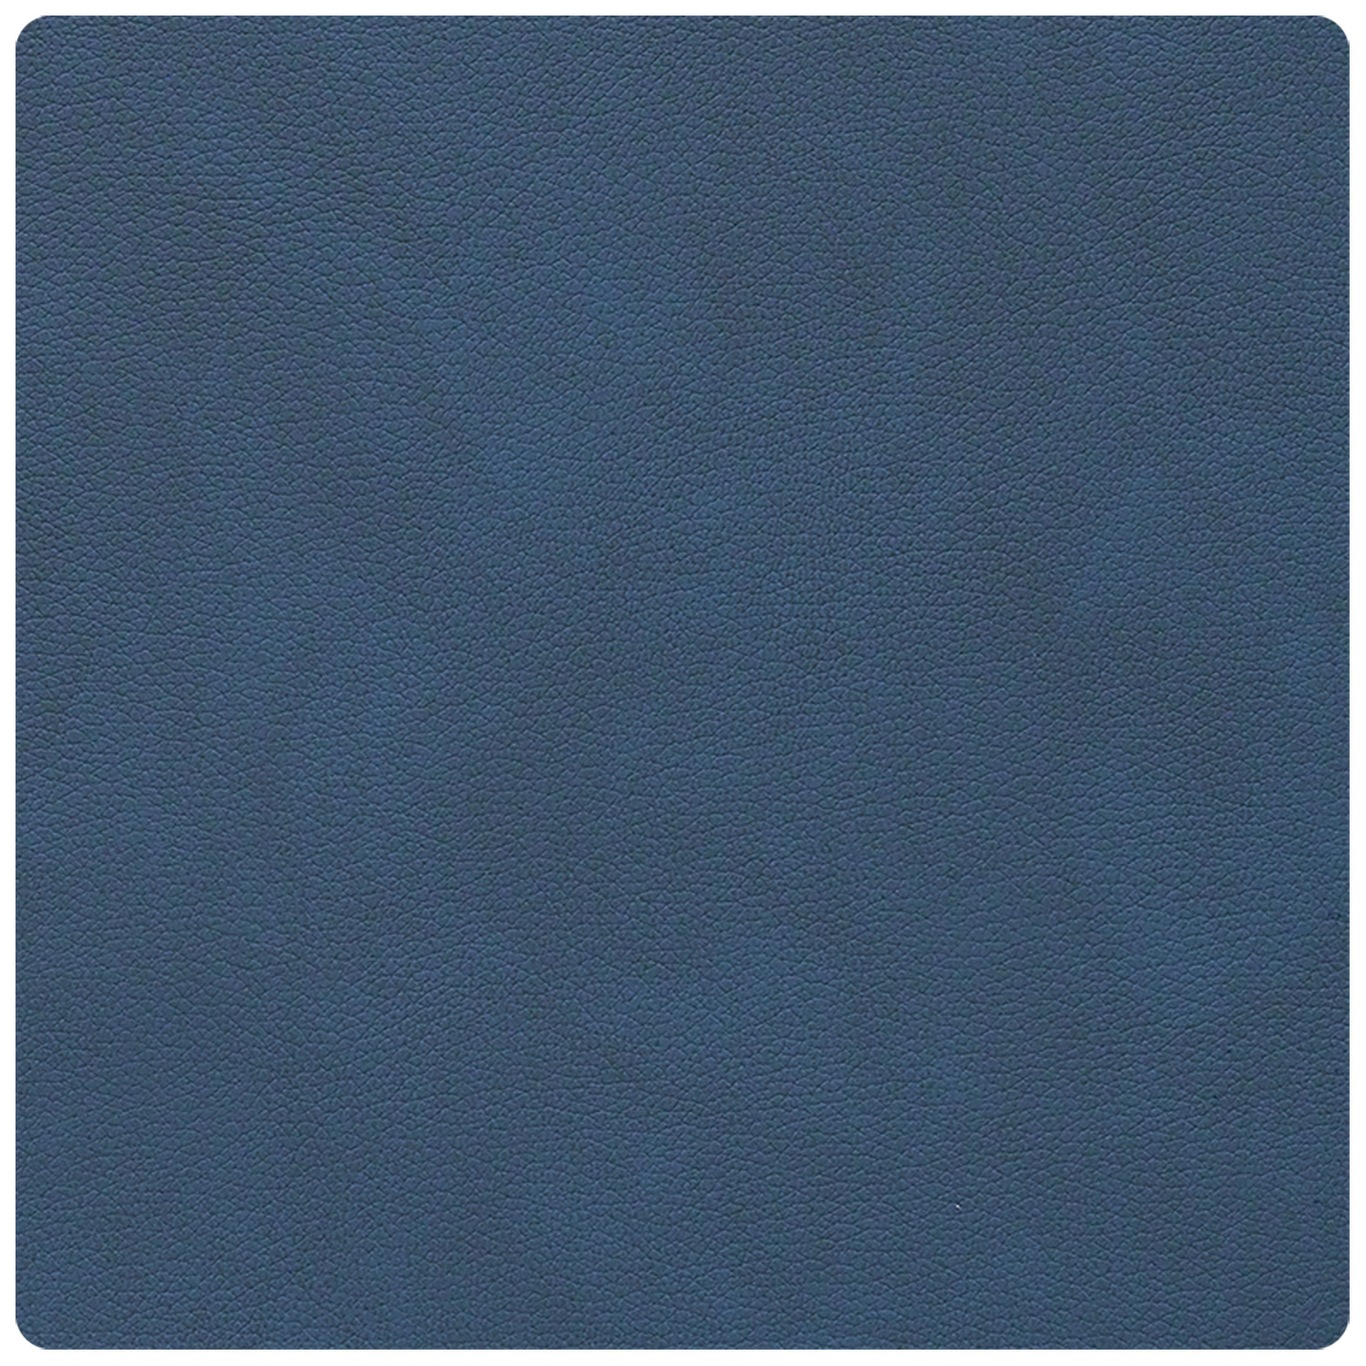 Square Glassunderlegg Nupo 10x10 cm, Midnight Blue